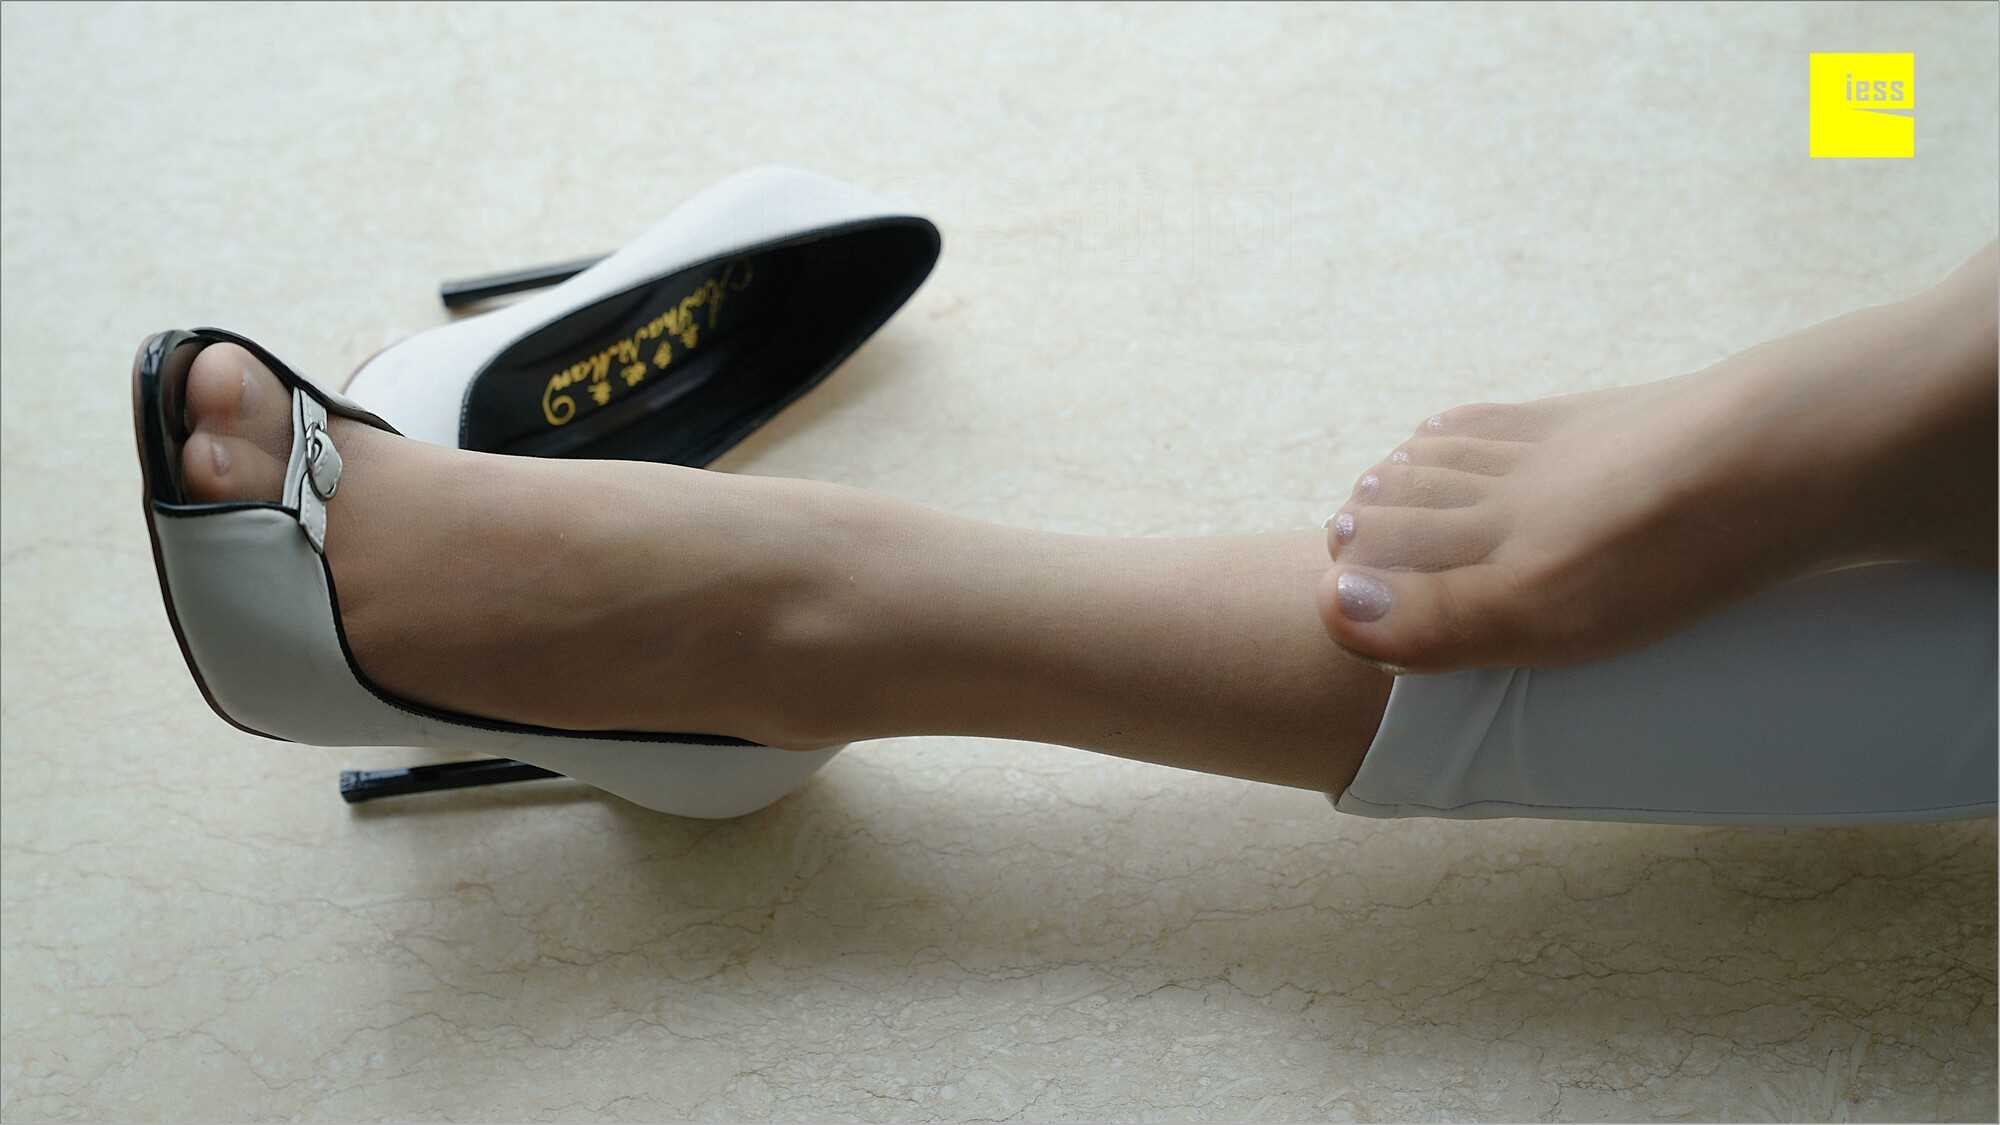 China Beauty Legs and feet 538